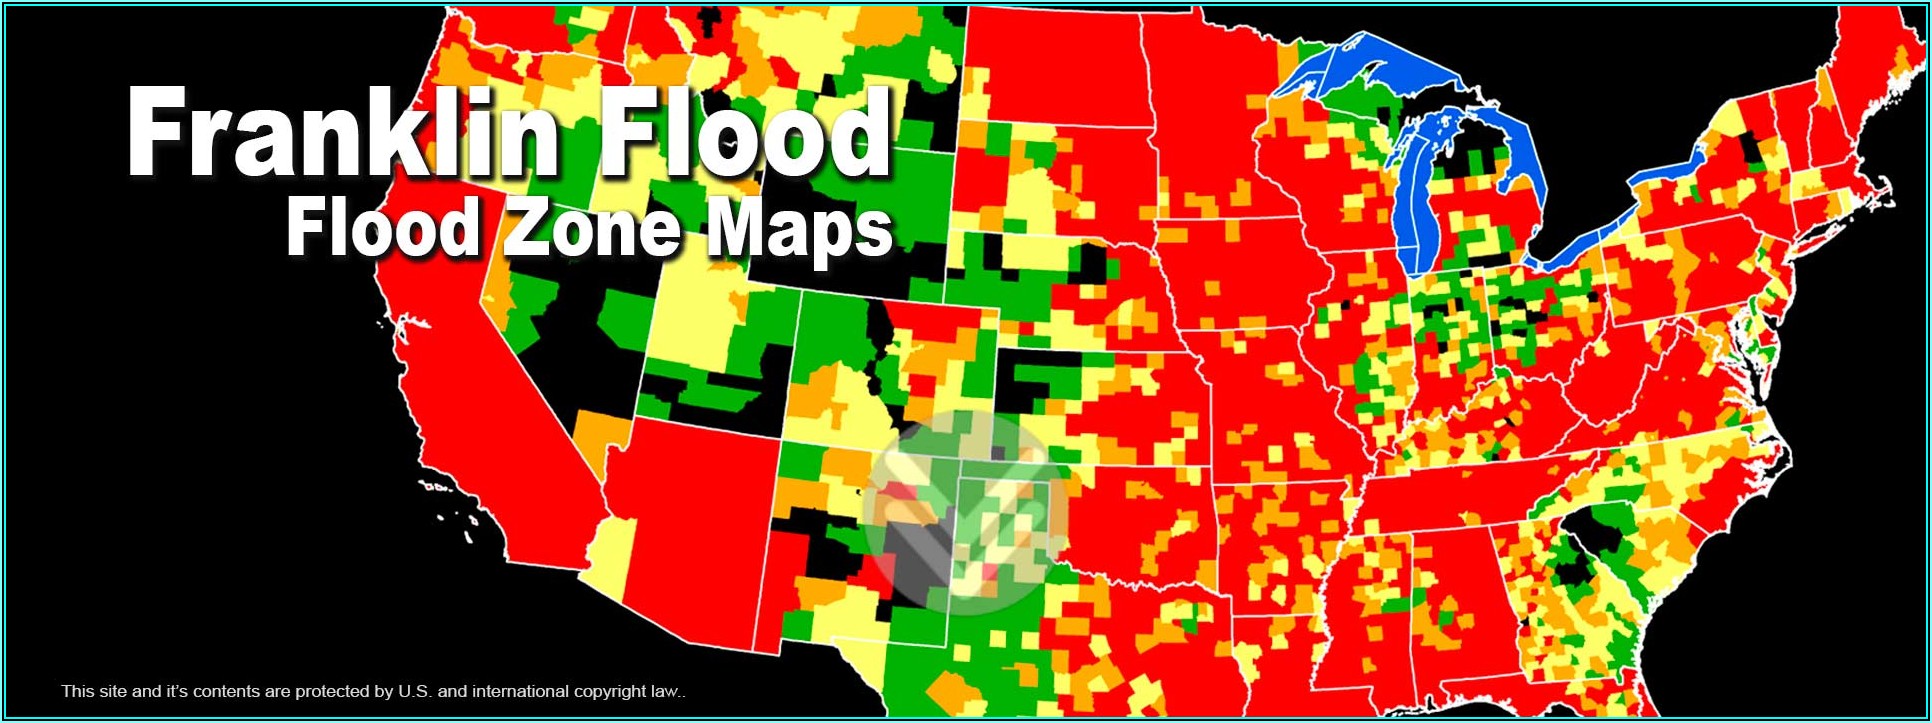 Flood Insurance Rate Map Uk